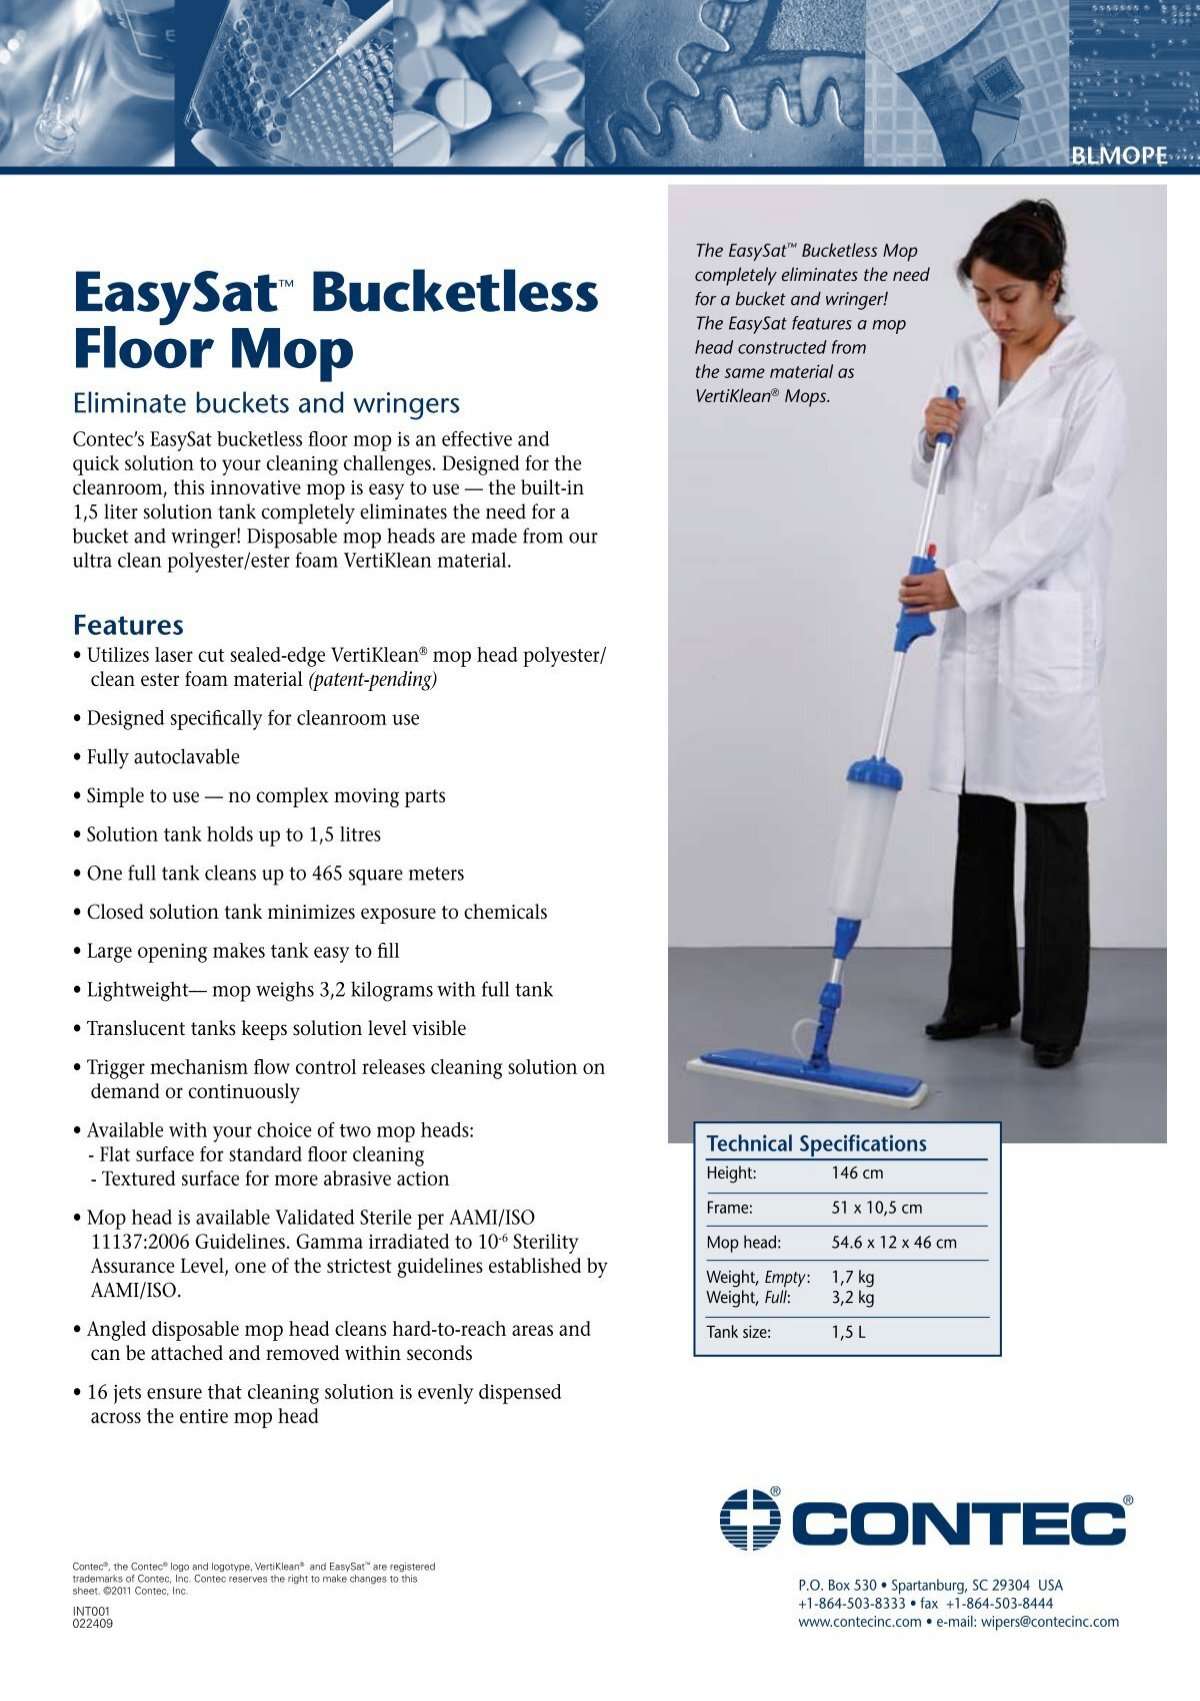 Contec EasySat Bucketless Mop System